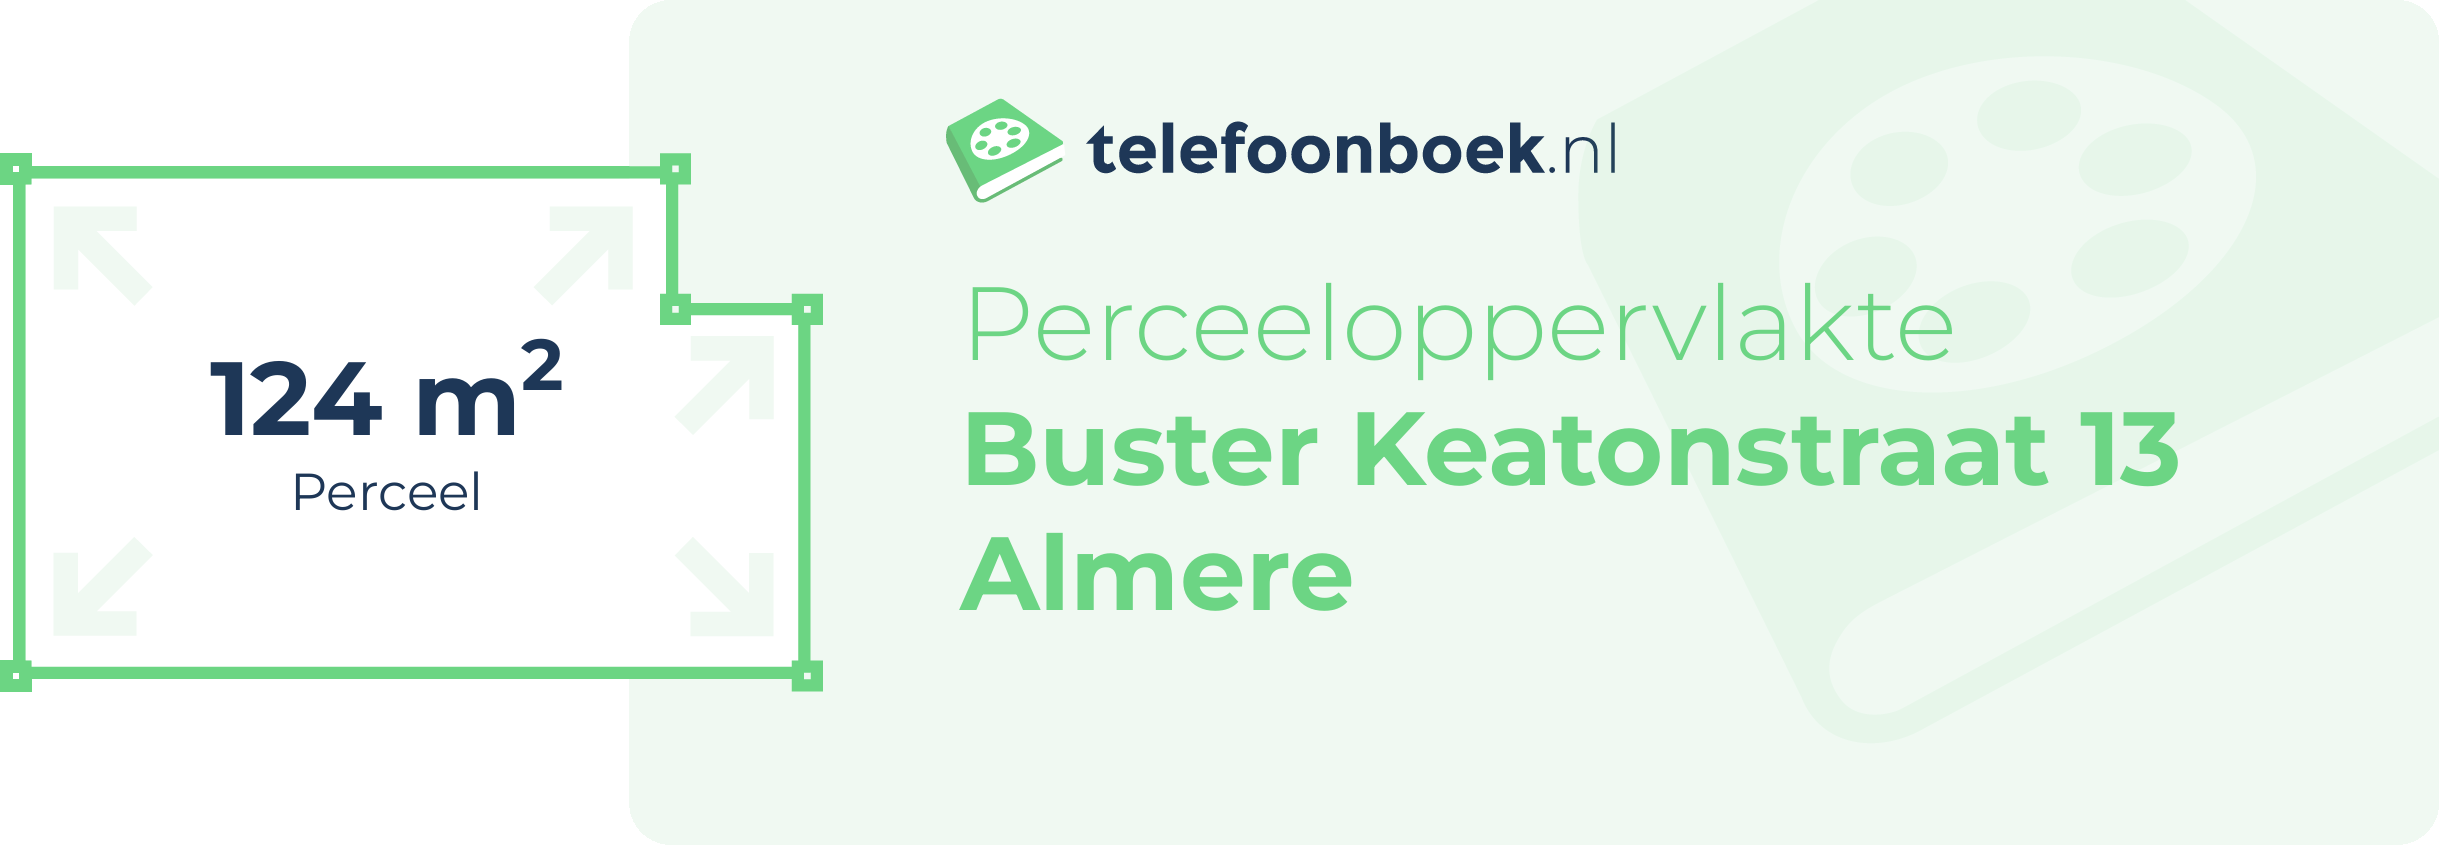 Perceeloppervlakte Buster Keatonstraat 13 Almere